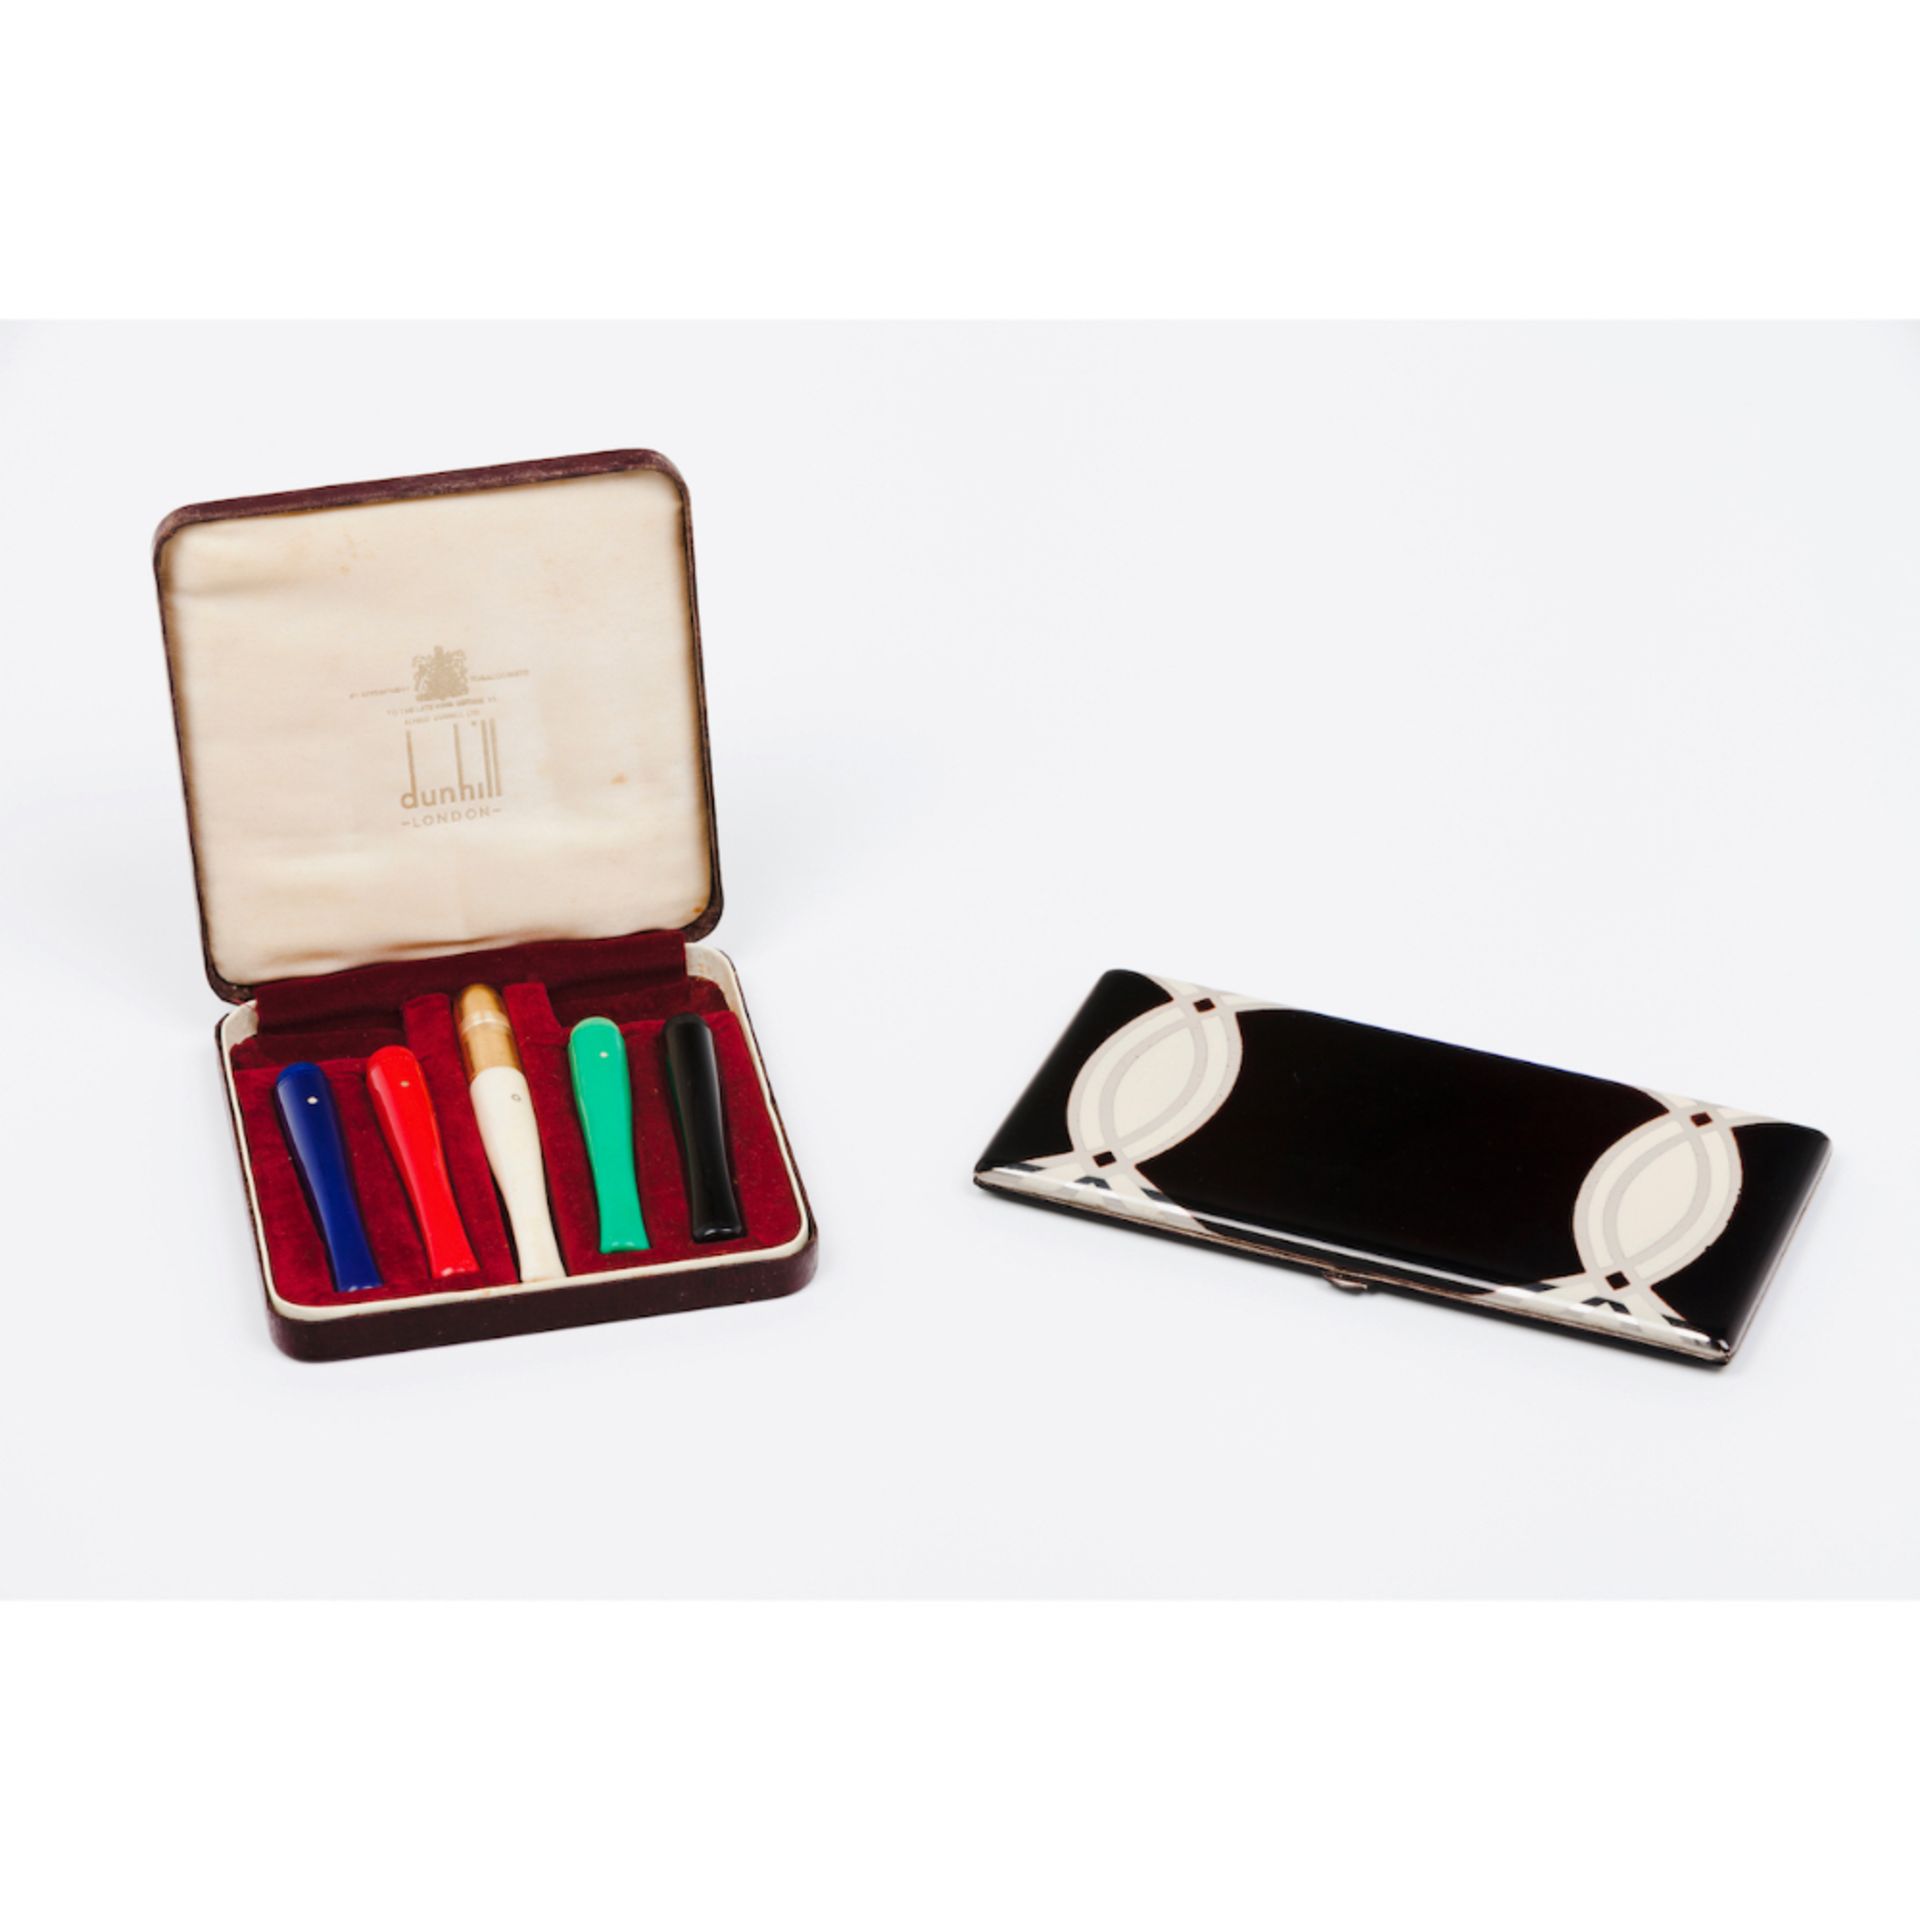 A smoking setA cased cigarette case and five cigarette holders Metal and plastic8x16,5 cm (cigarette